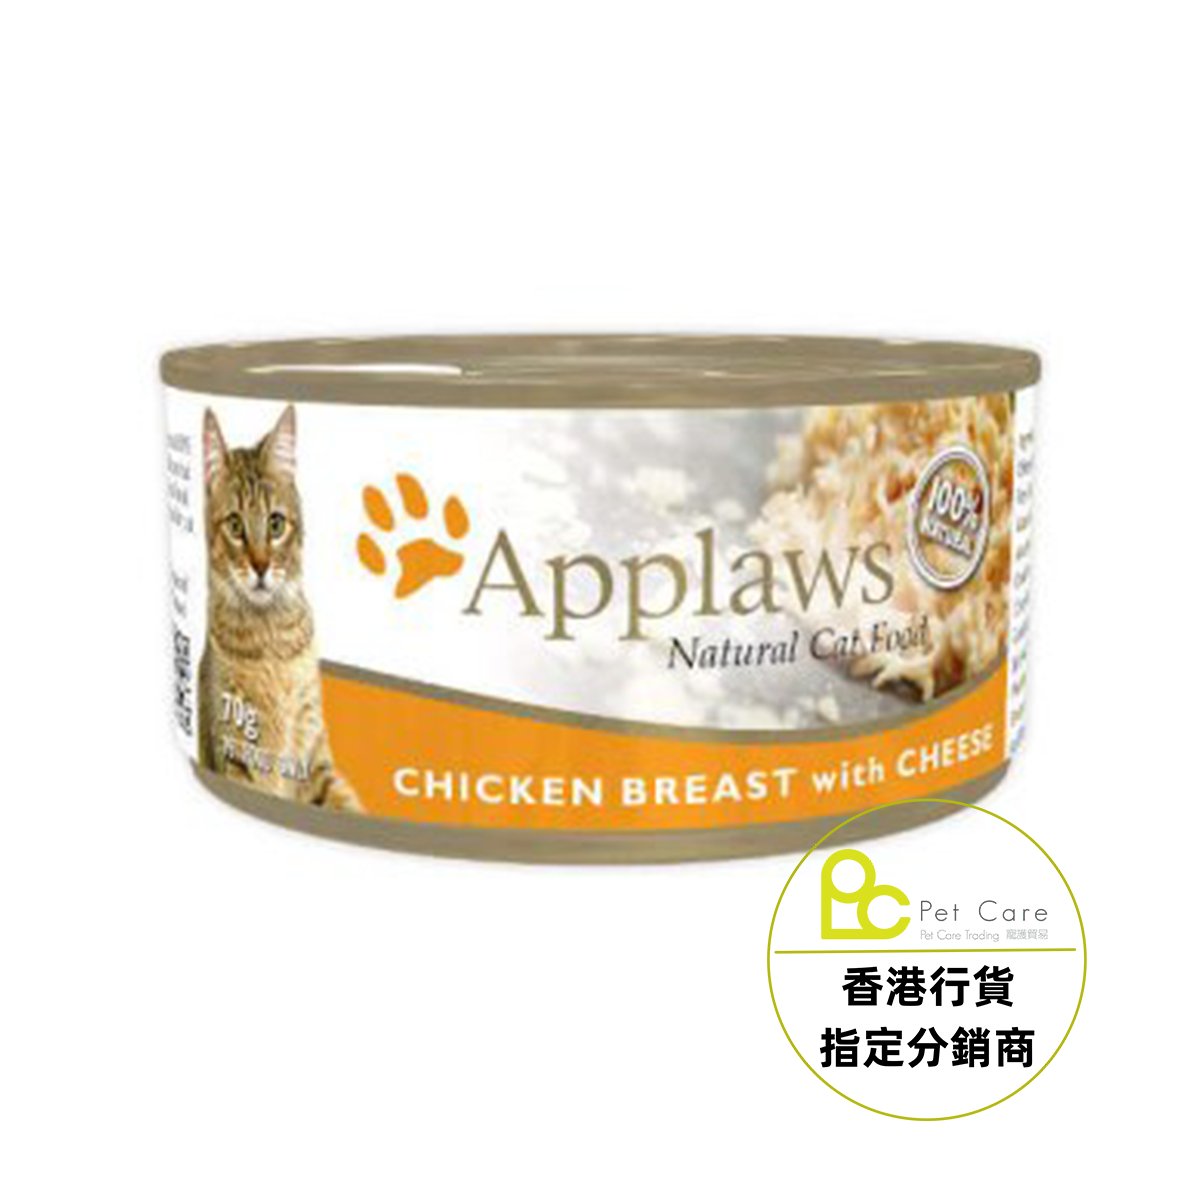 Applaws 全天然 貓罐頭 - 雞胸芝士 70g (細)